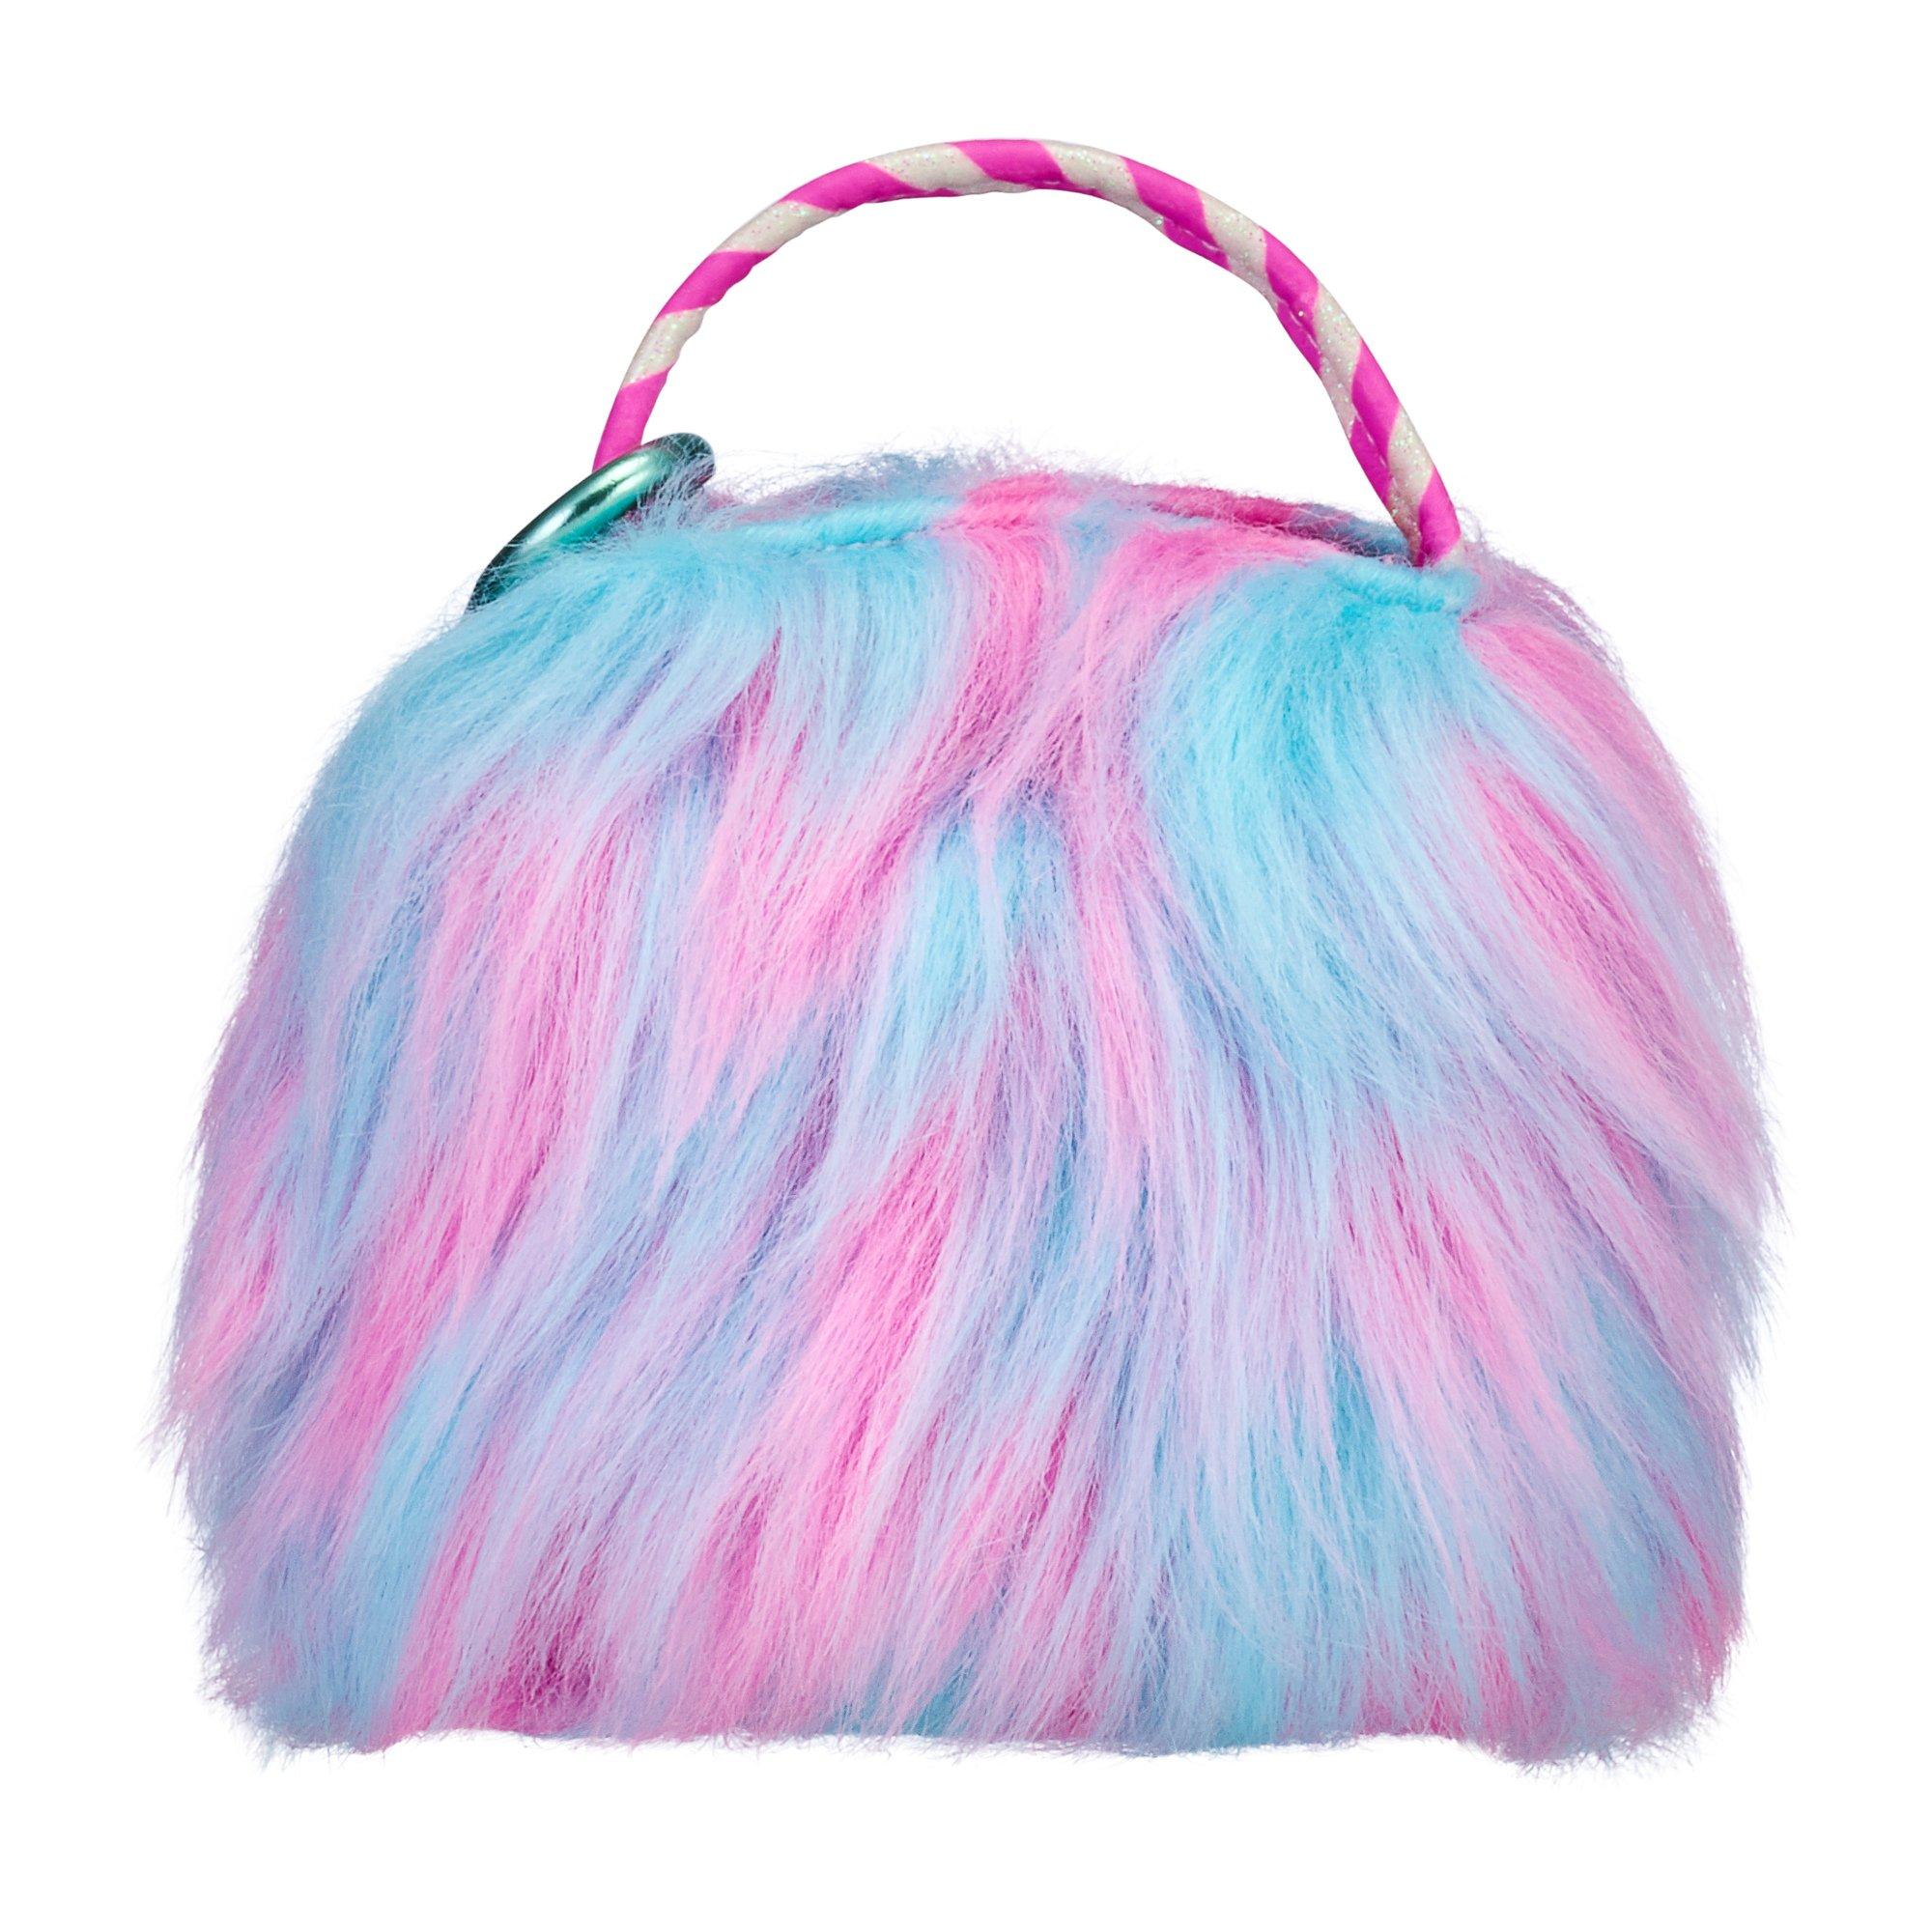 REAL LITTLES Handbags Series 3 - Pink Lips Bag + 6 Surprises - NEW IN BOX